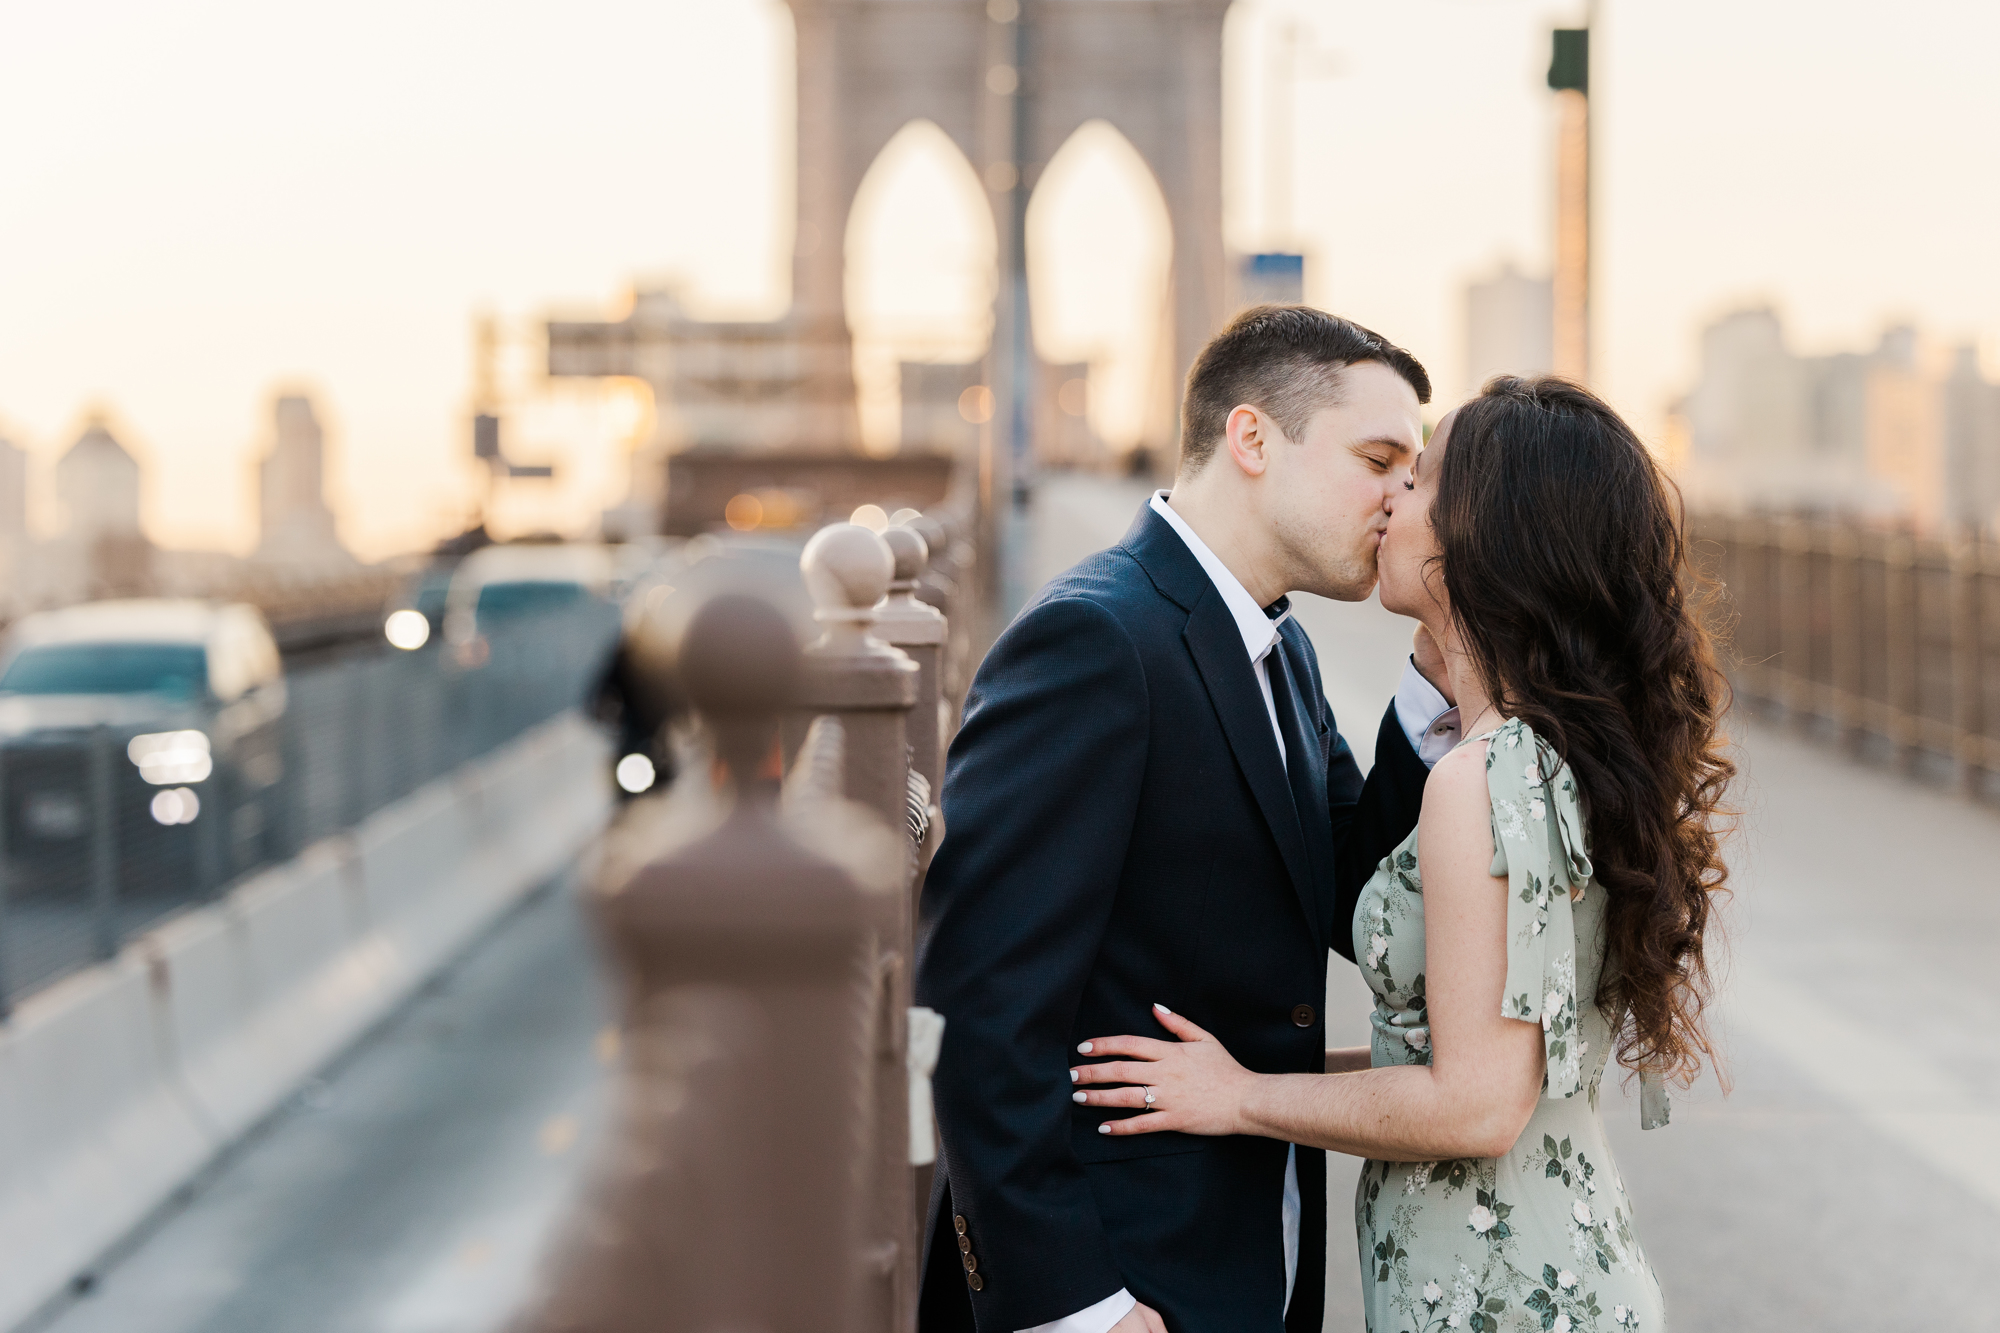 Vivid Brooklyn Bridge and South Street Seaport Engagement Photography